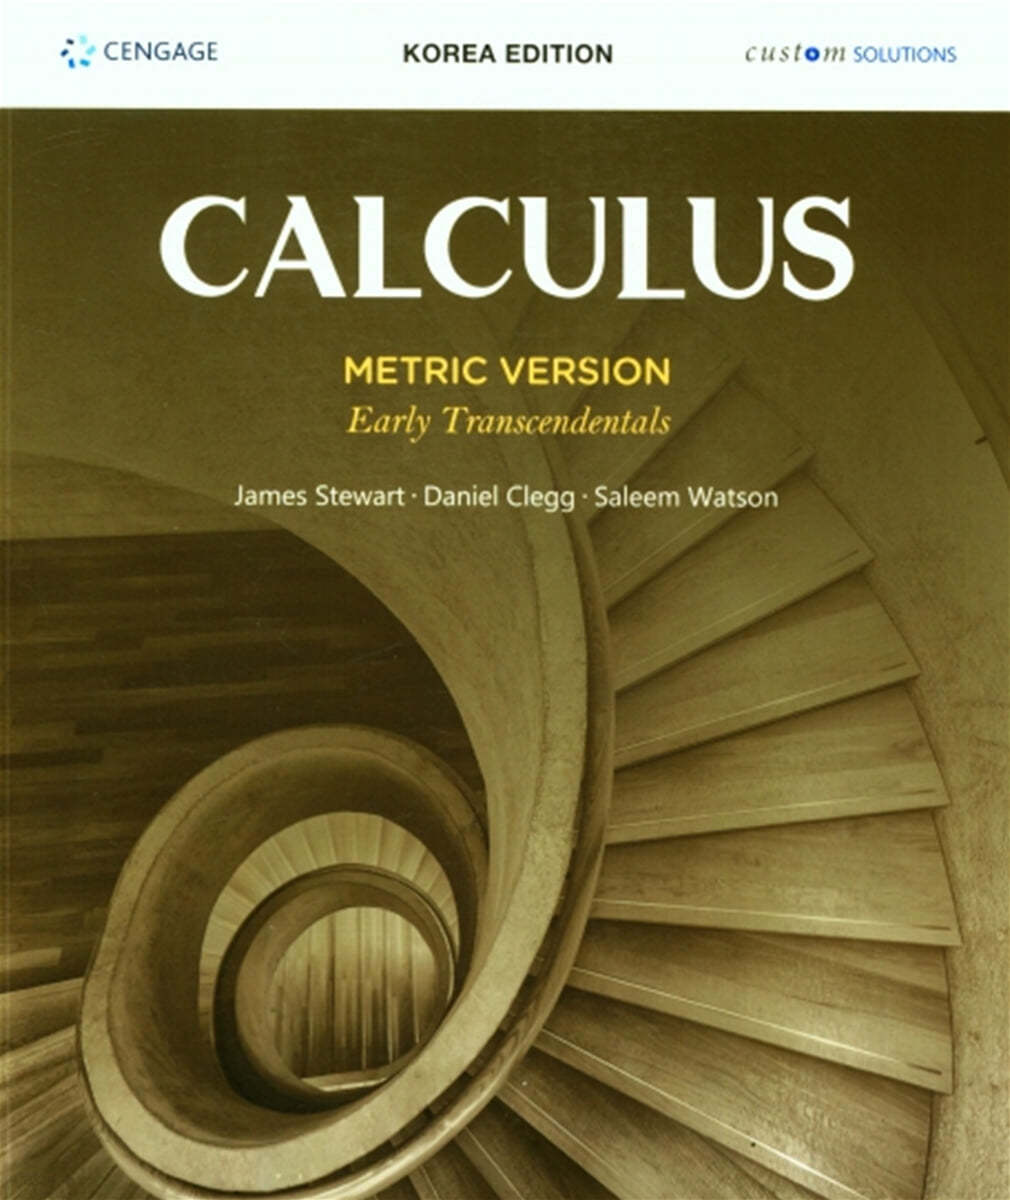 Calculus Early Transcendentals, Korea Edition